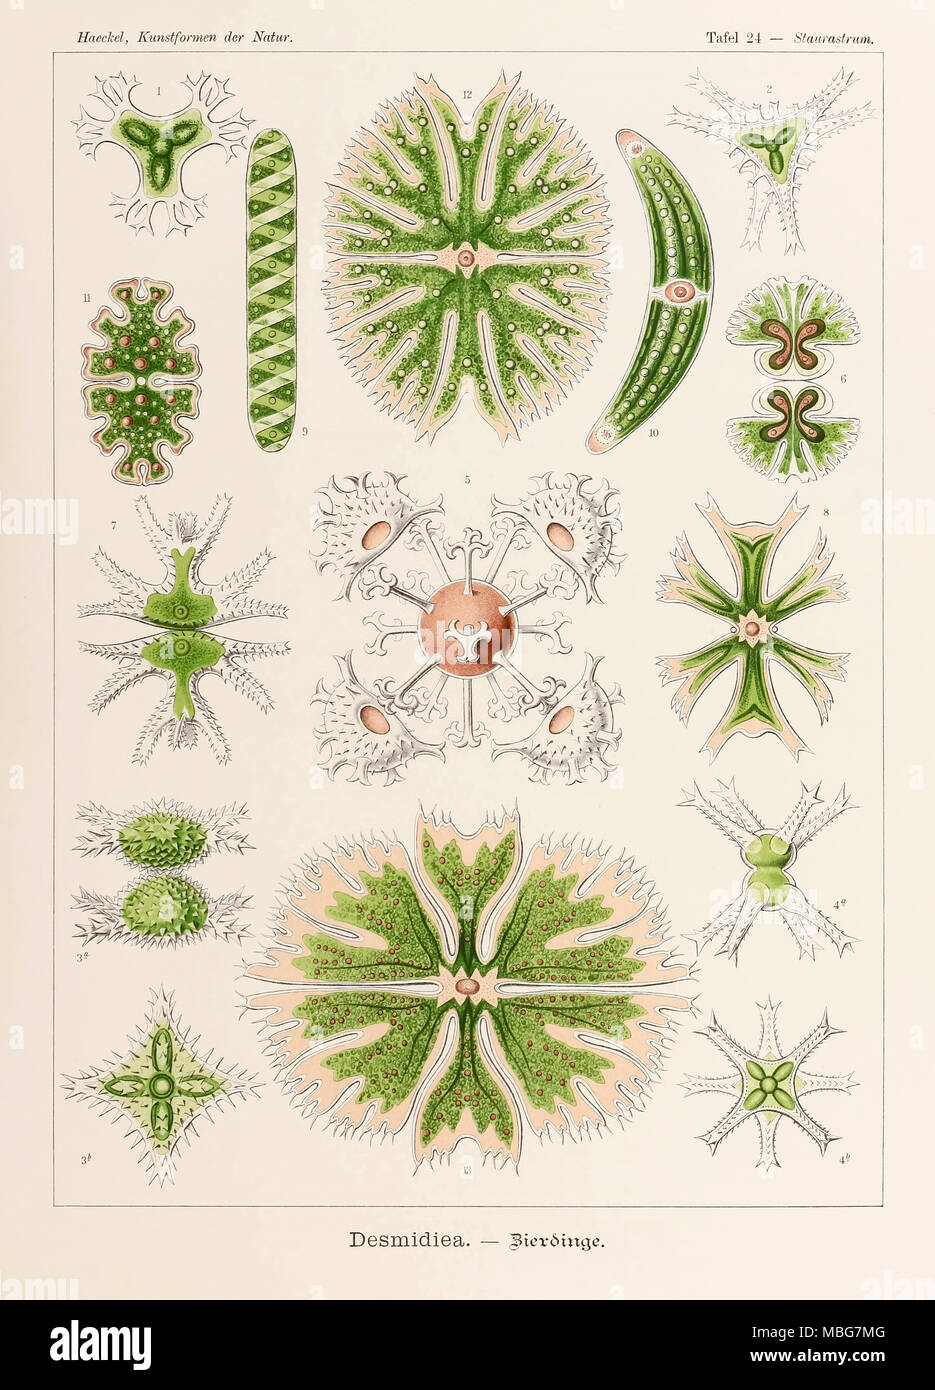 Plate 24 Staurastrum Desmidiea from ‘Kunstformen der Natur’ (Art Forms in Nature) illustrated by Ernst Haeckel (1834-1919). See more information below. Stock Photo